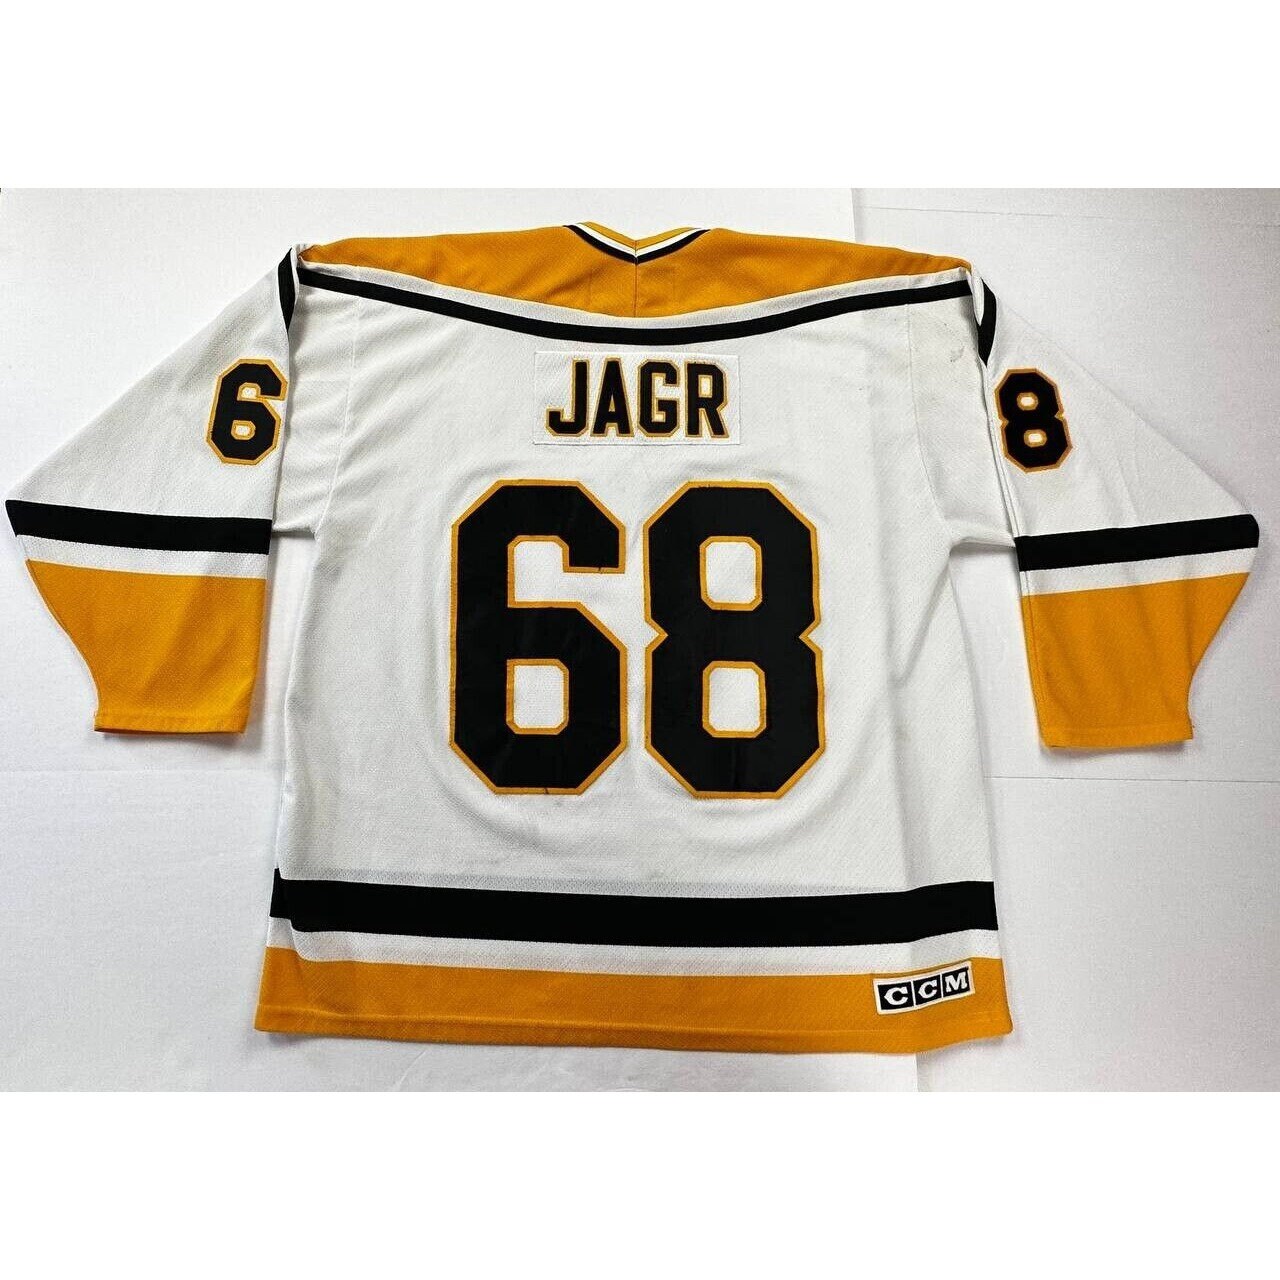 Buy Jagr Penguins Jersey Online In India -  India